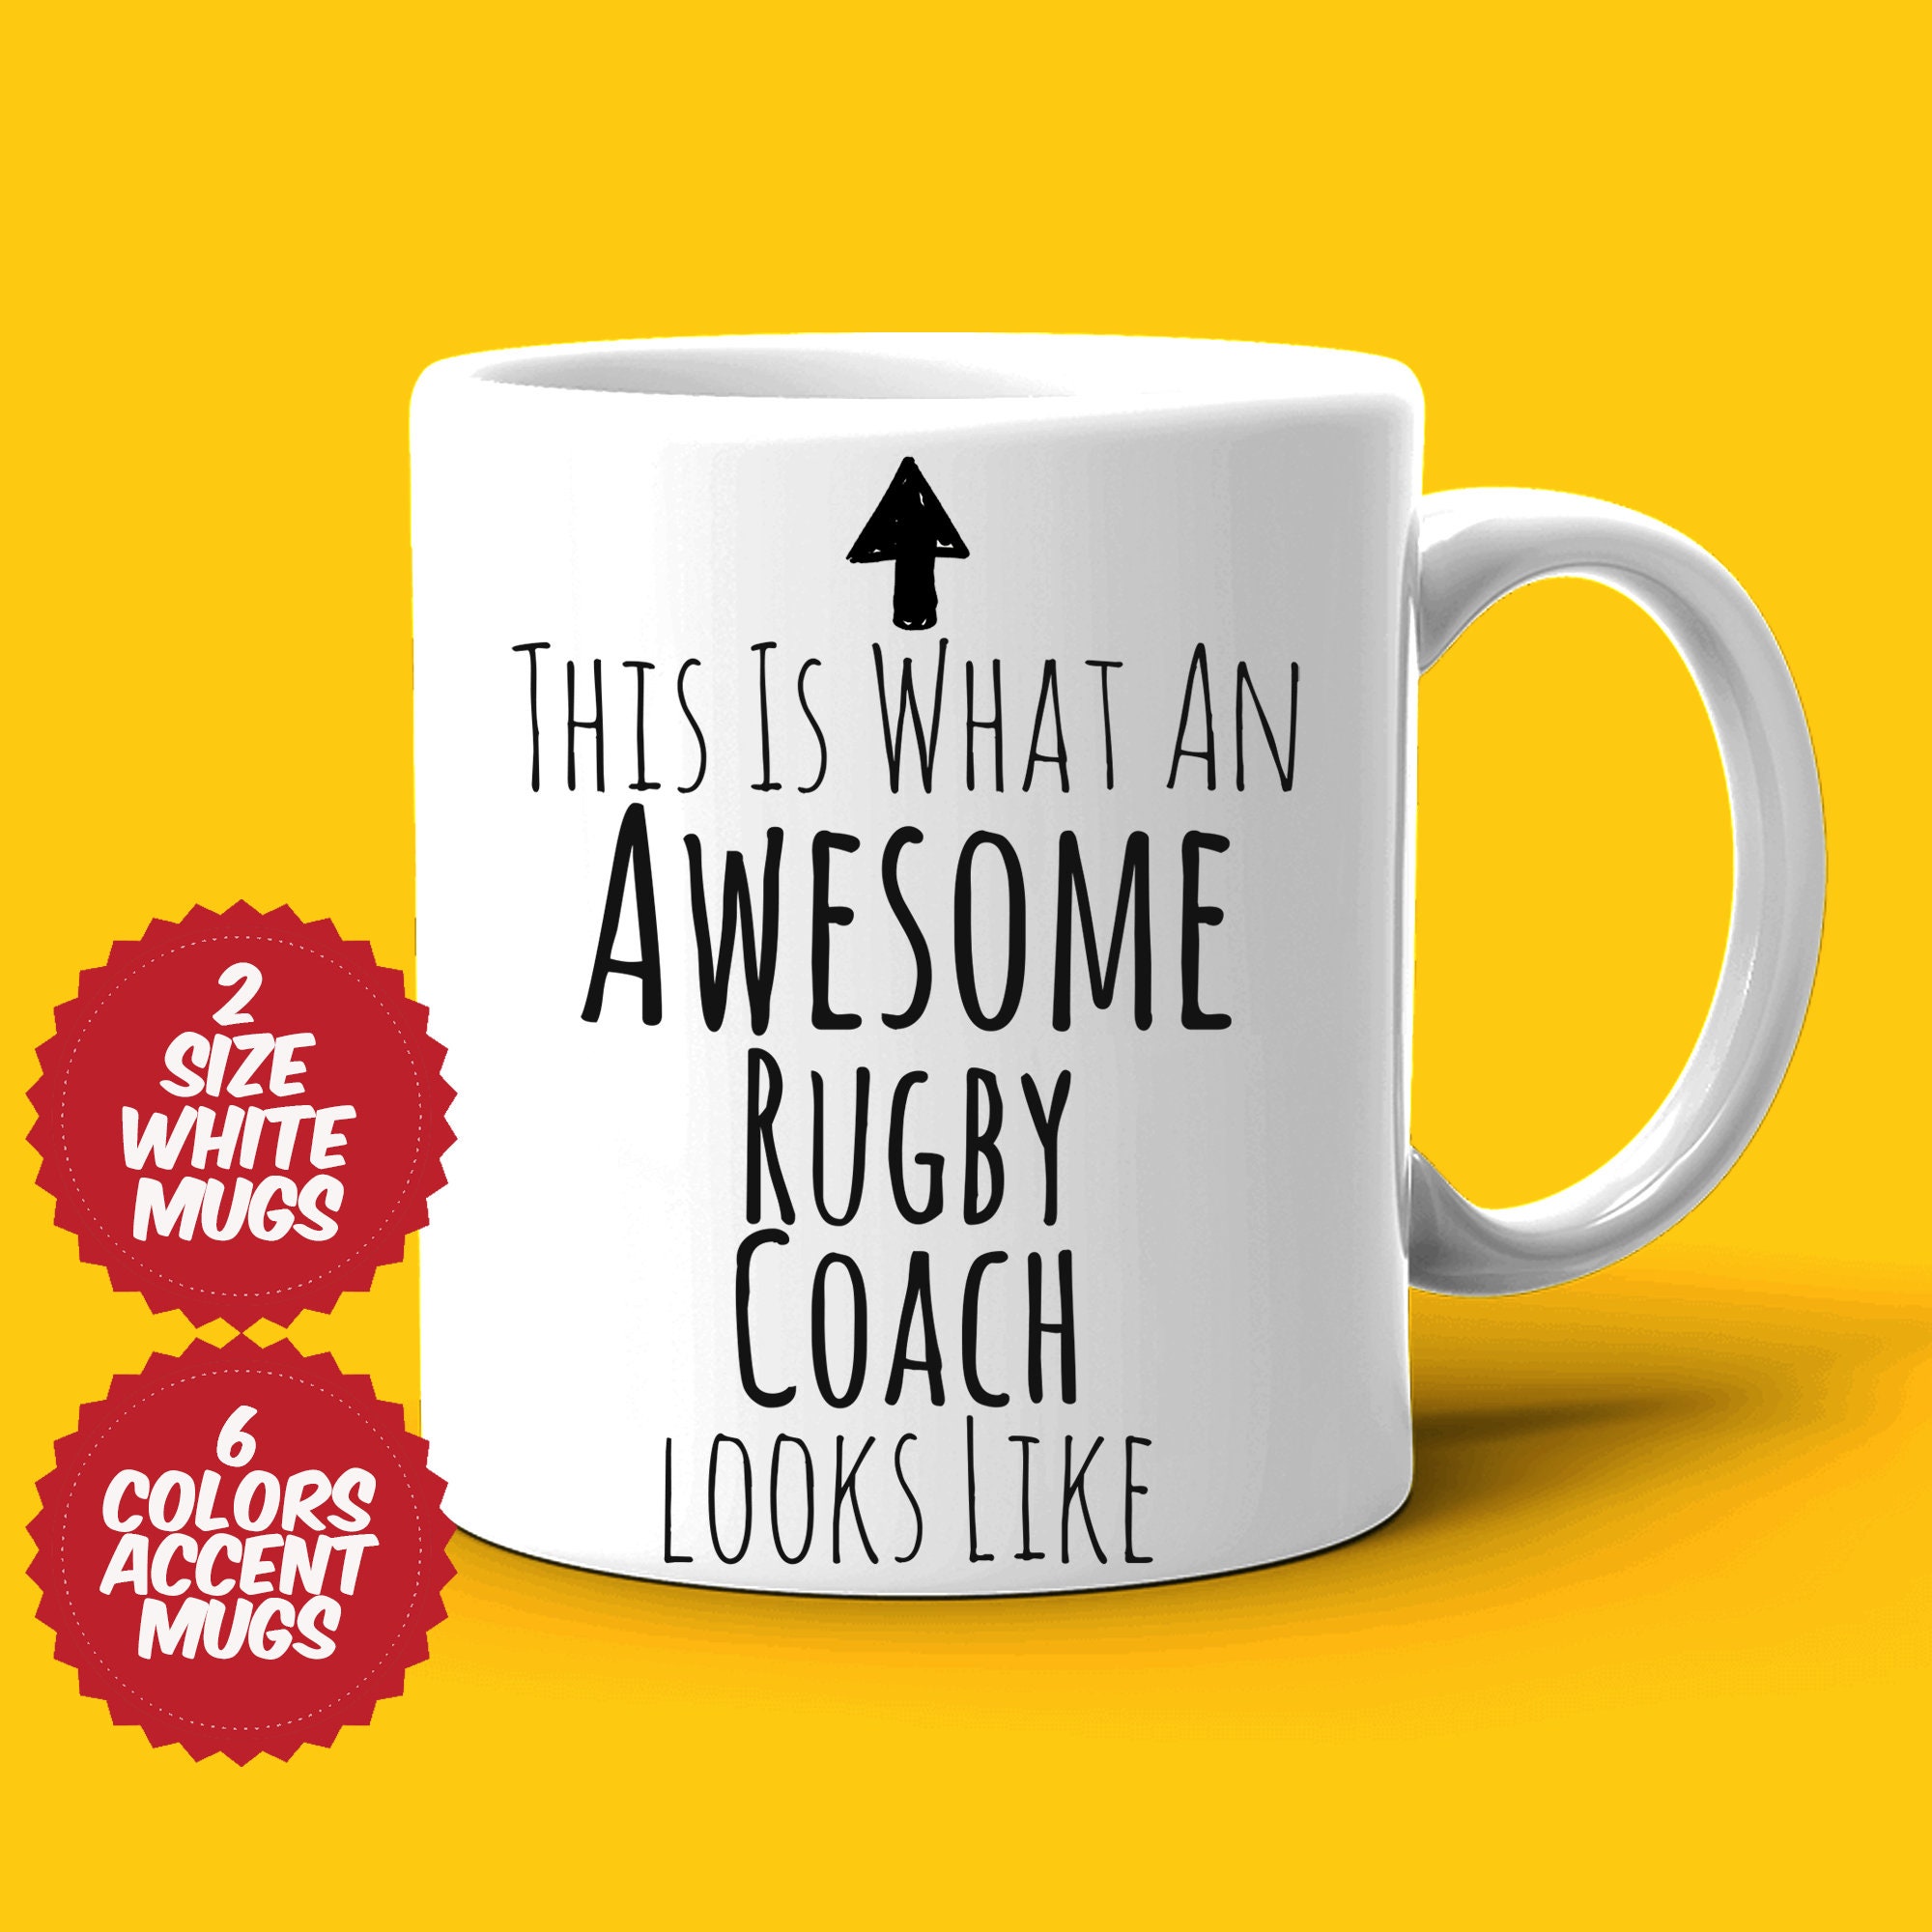 Mug céramique blanche Fille Rugby Noir - Stick Marquage Agen